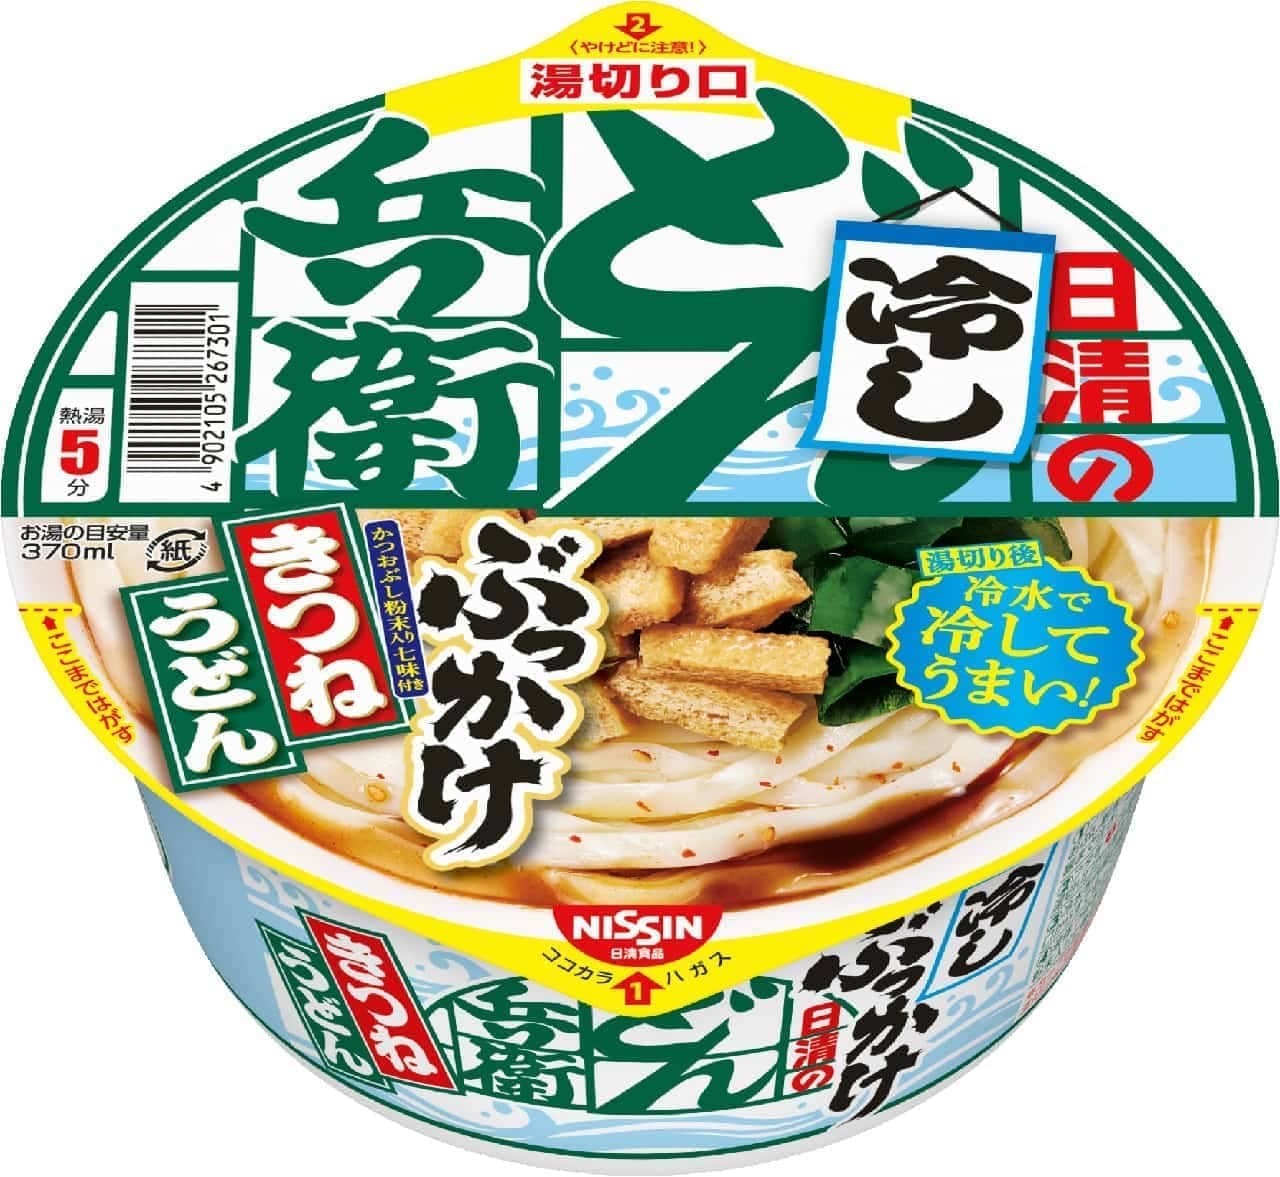 Nissin Foods "Nissin's Cold Donbei Bukkake Kitsune Udon"